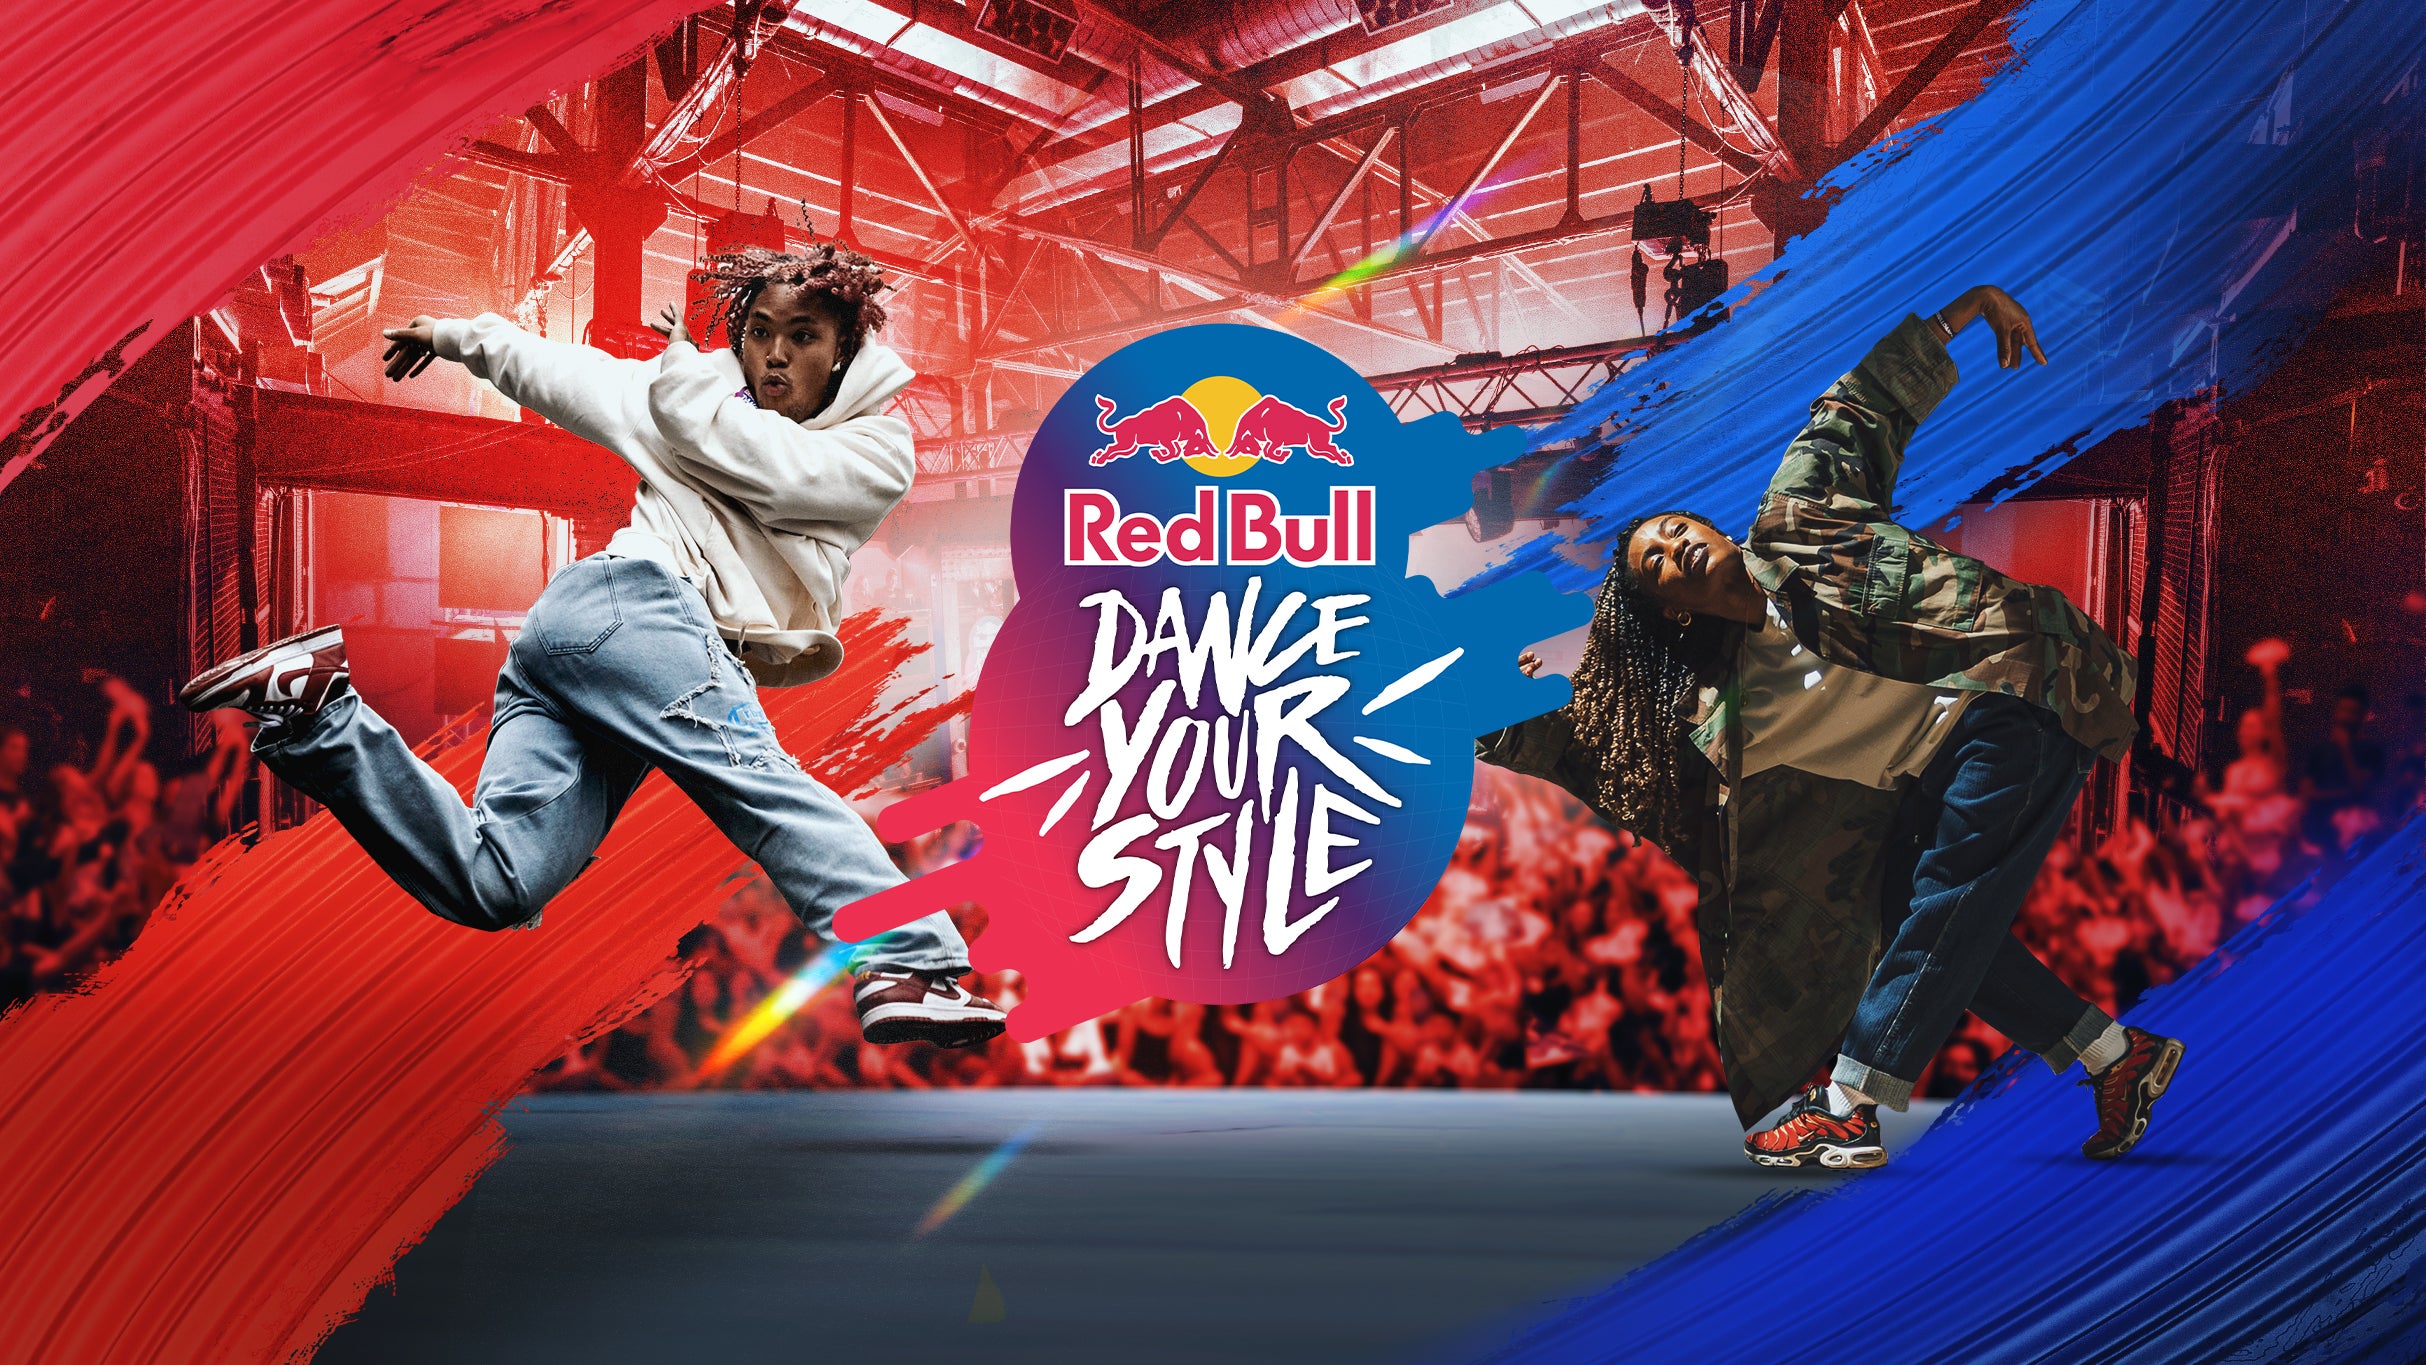 Red Bull Dance Your Style in Boston promo photo for Citi® Cardmember Preferred presale offer code